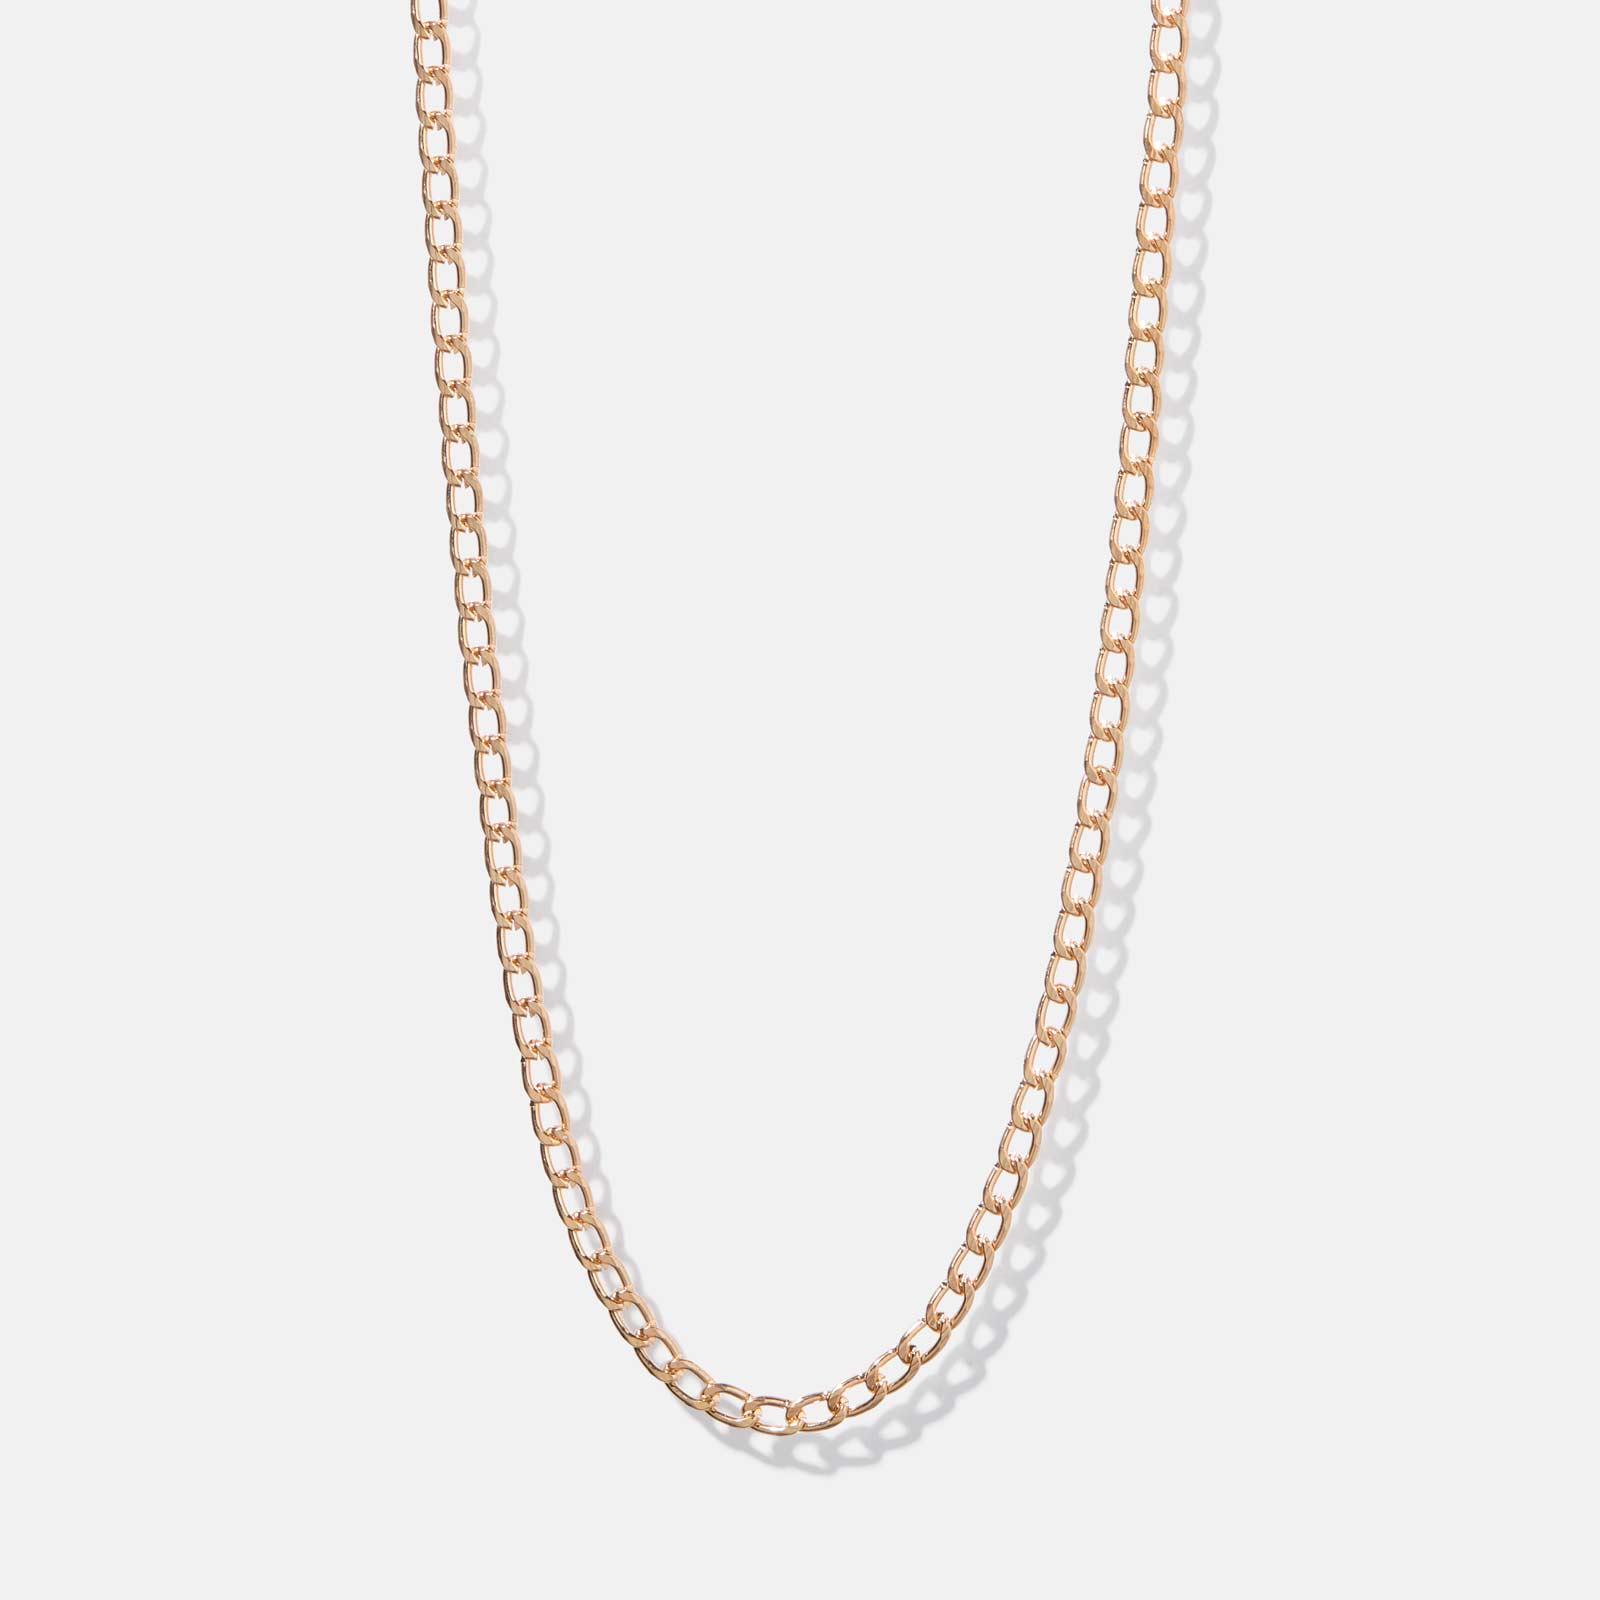 Guldfärgat halsband / Belly Chain - pansarkedja 70+6 cm